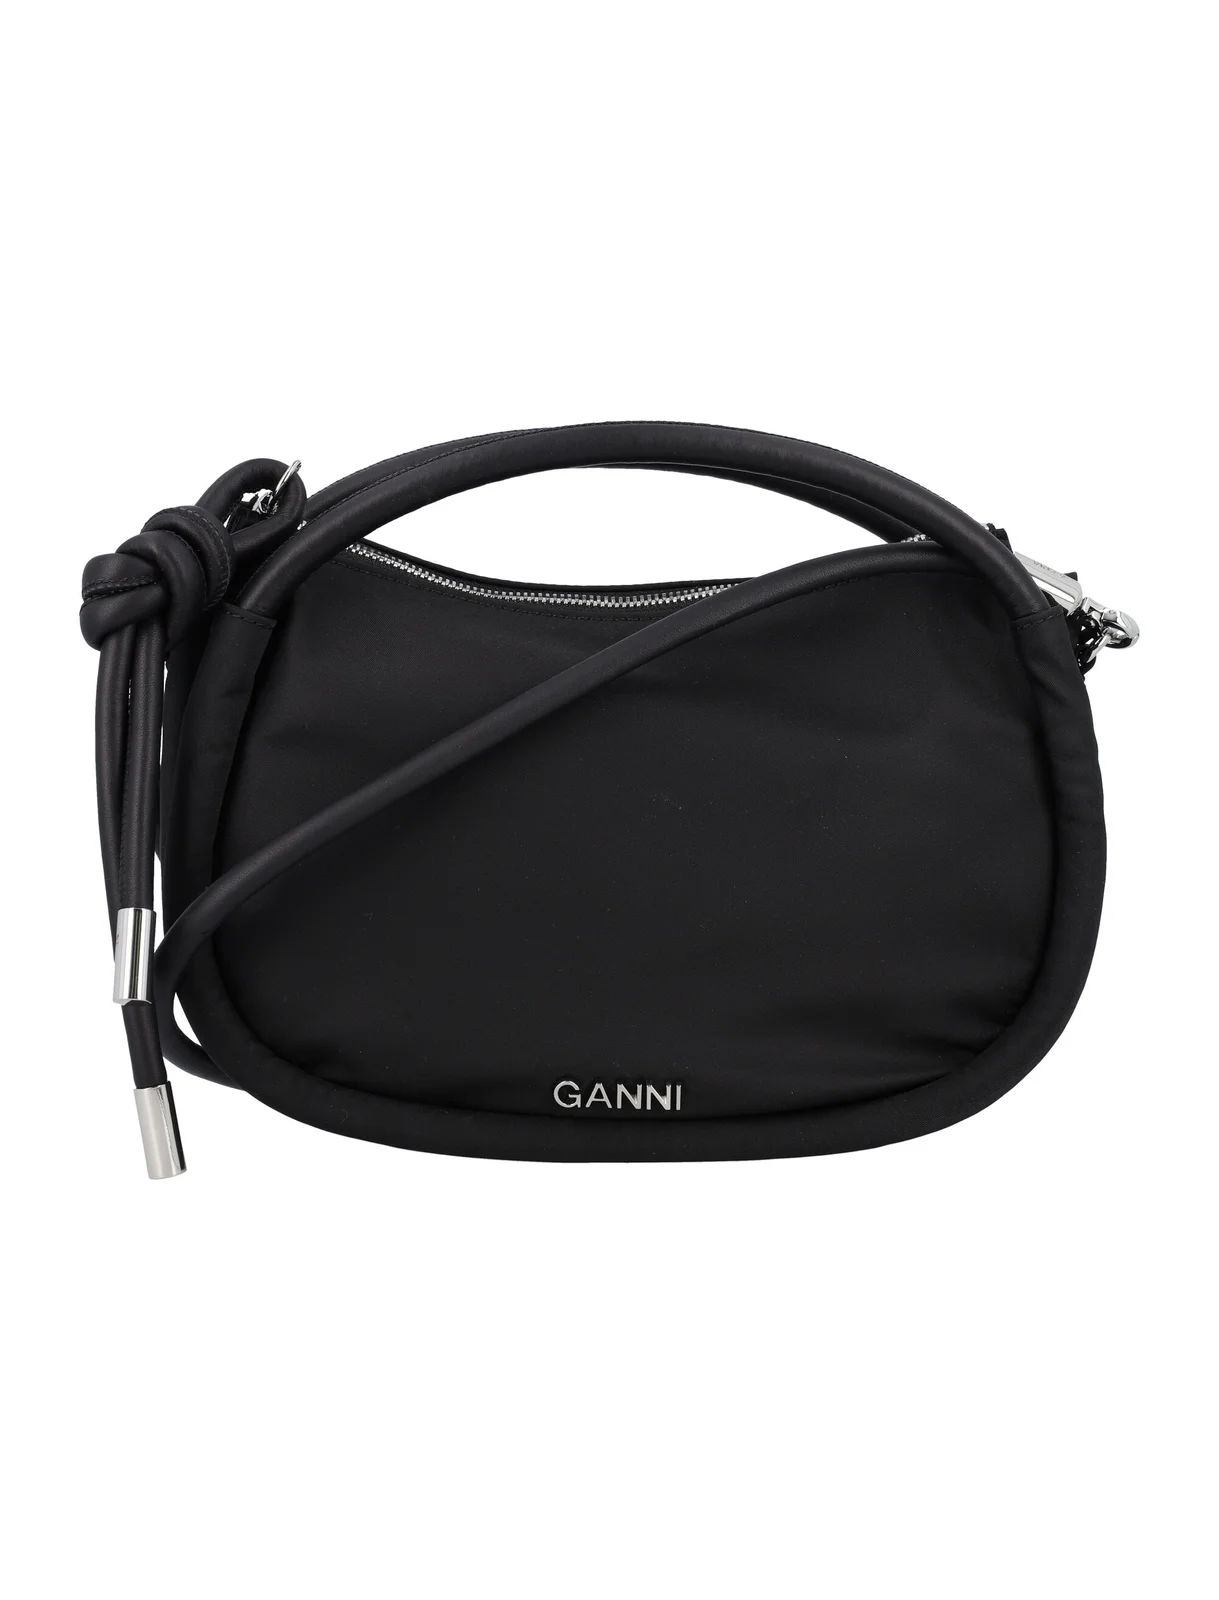 Ganni Knot-Detailed Top Handle Bag | Cettire Global